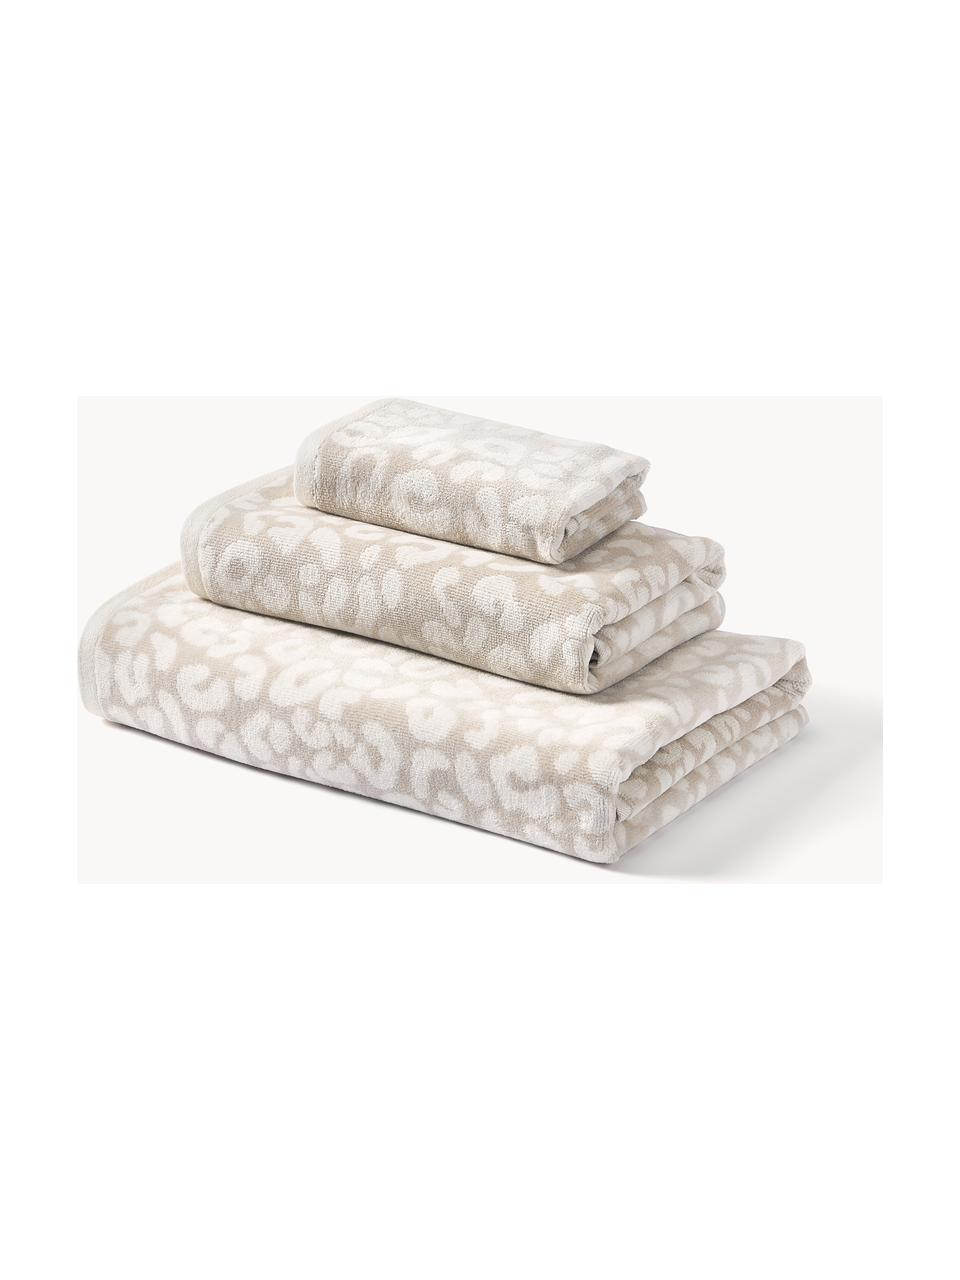 Set de toallas Leo, tamaños diferentes, Beige, Off White, Set de 3 (toalla tocador, toalla lavabo y toalla de ducha)